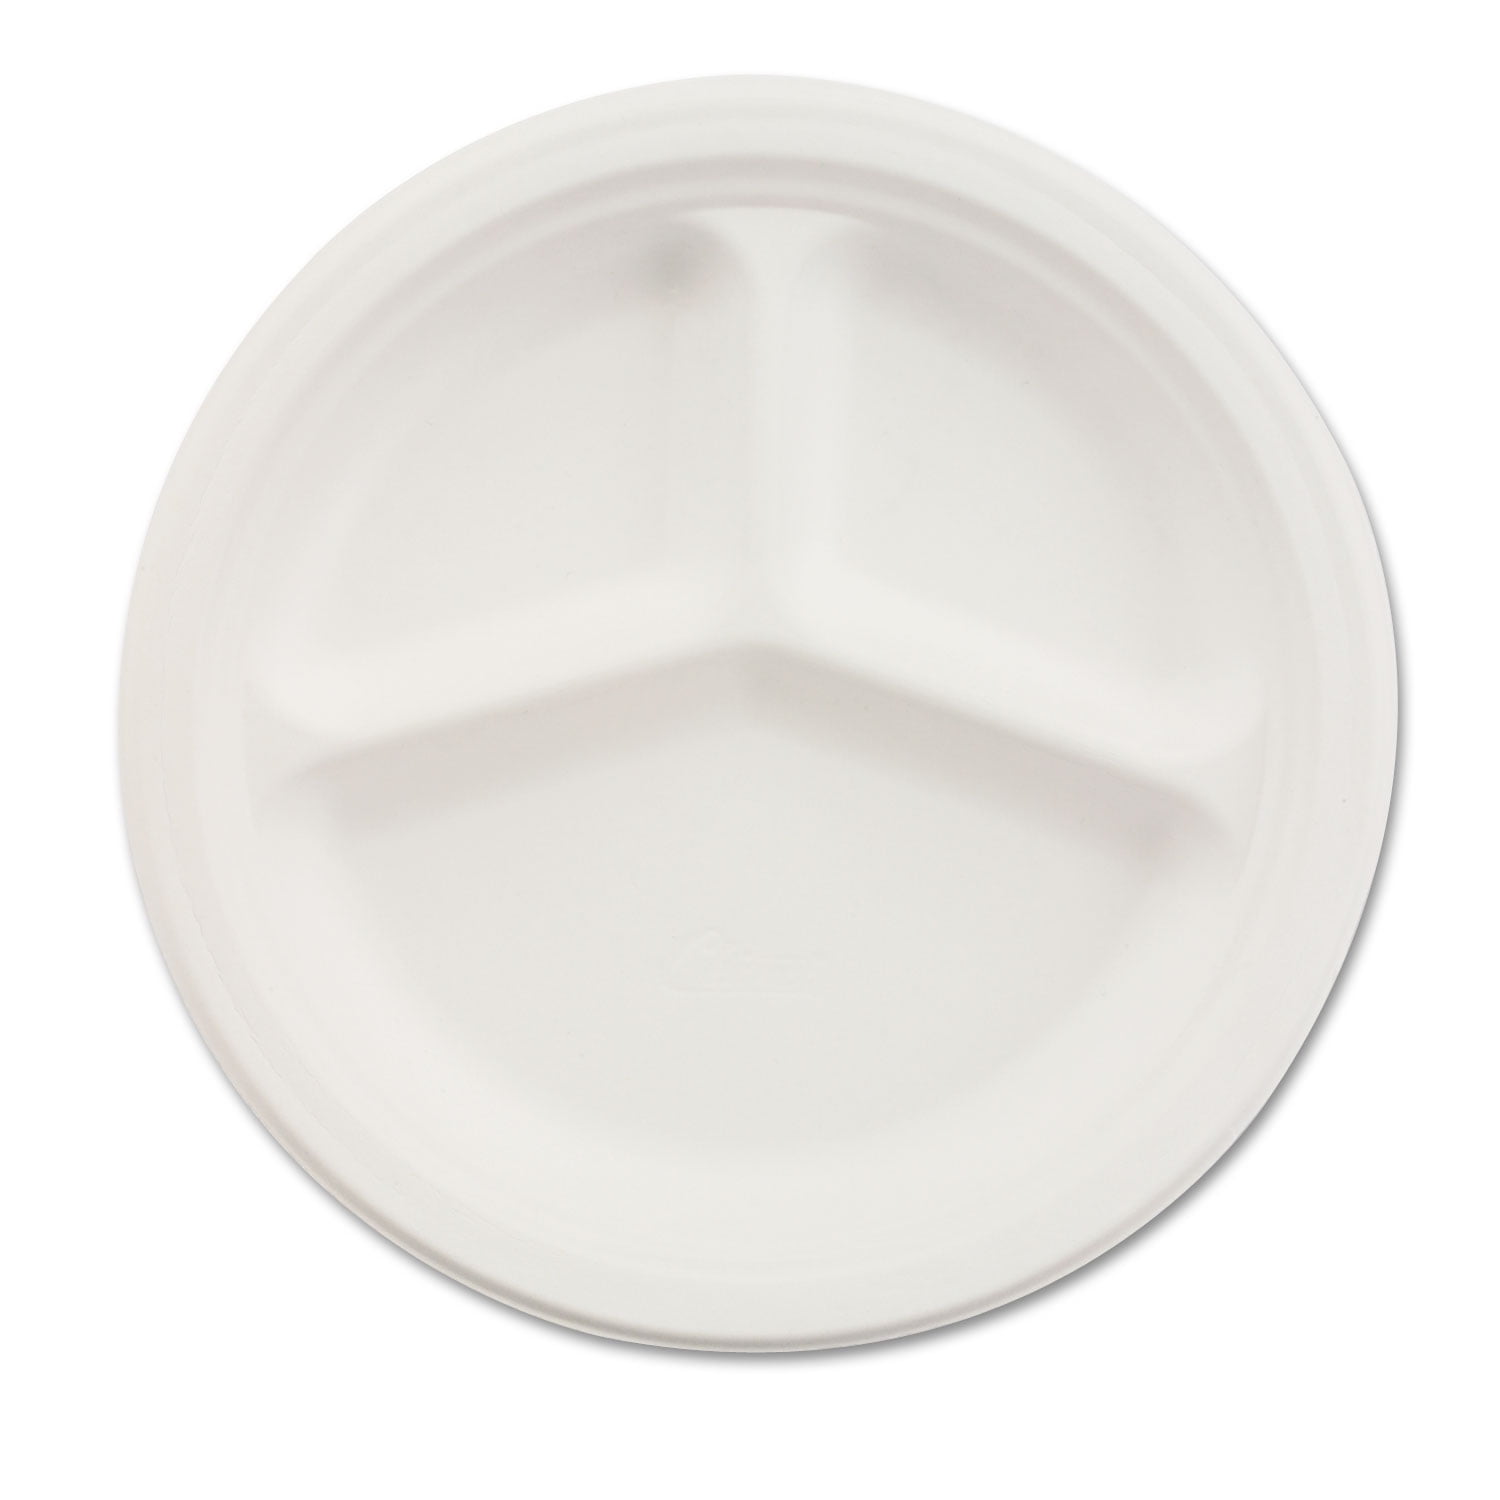 Chinet Paper Dinnerware, 3-Comp Plate, 9 1/4 Dia, White, 500/Carton